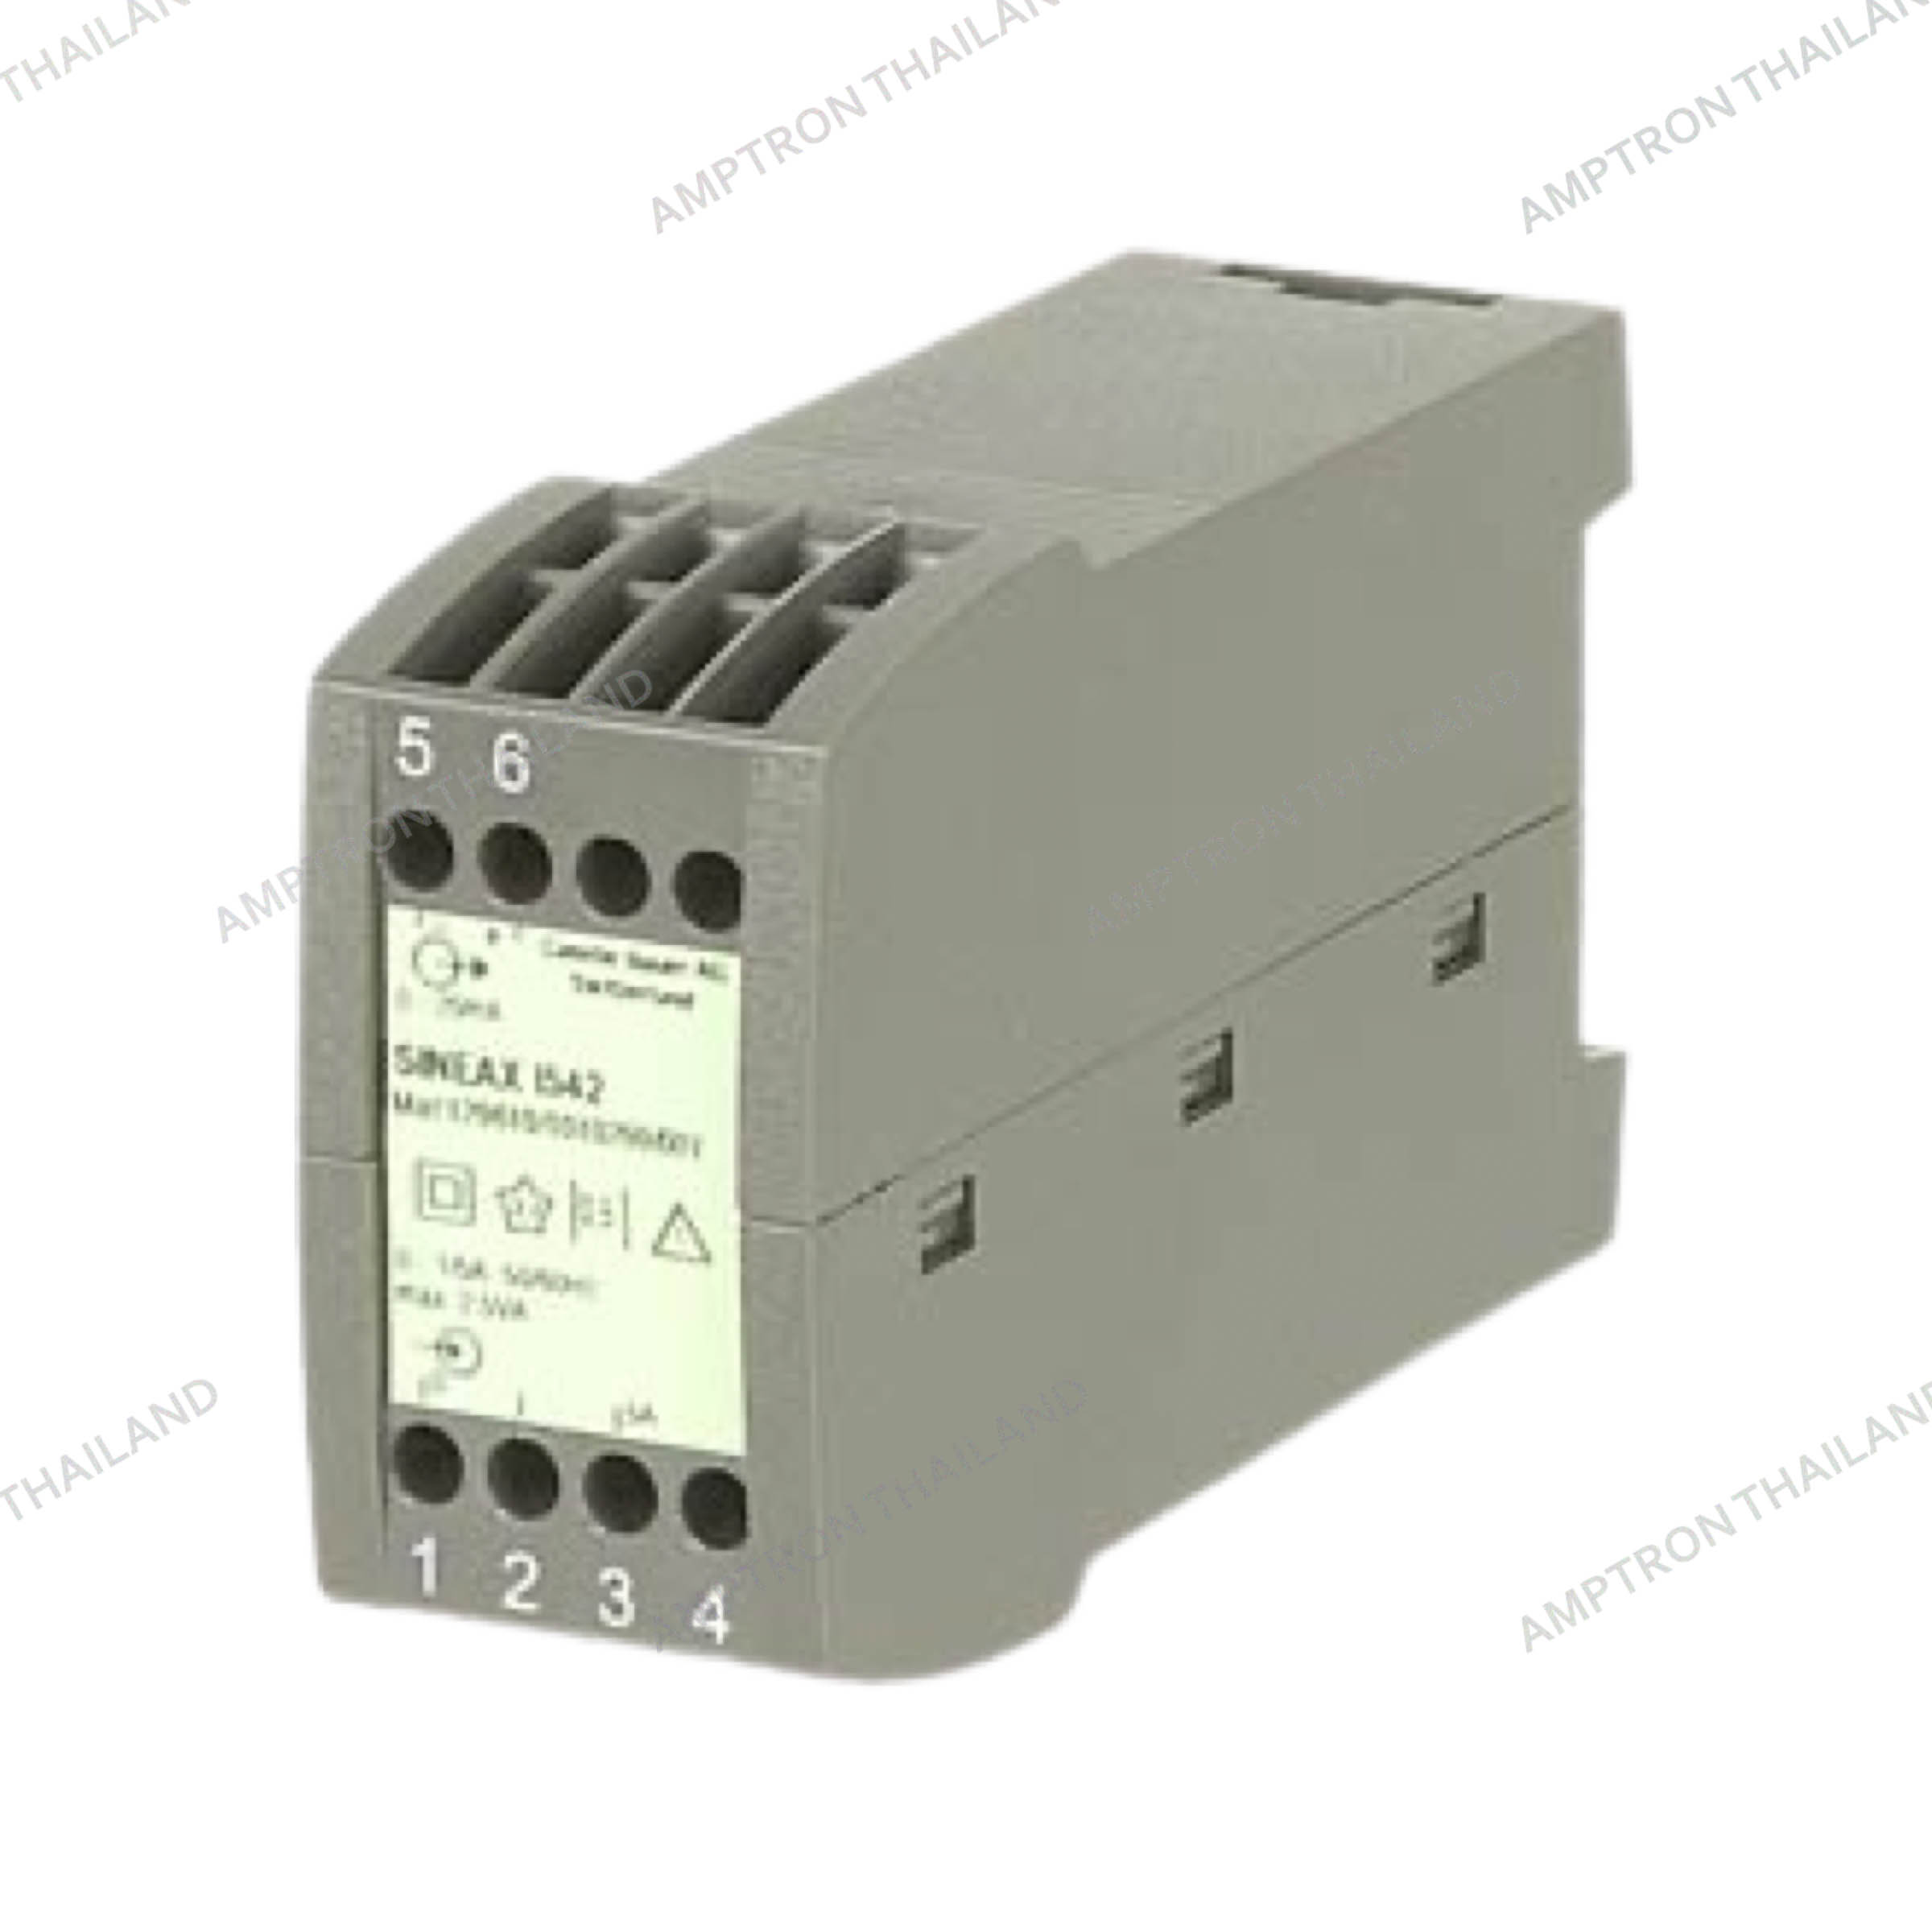 SINEAX I542 Series Transducer